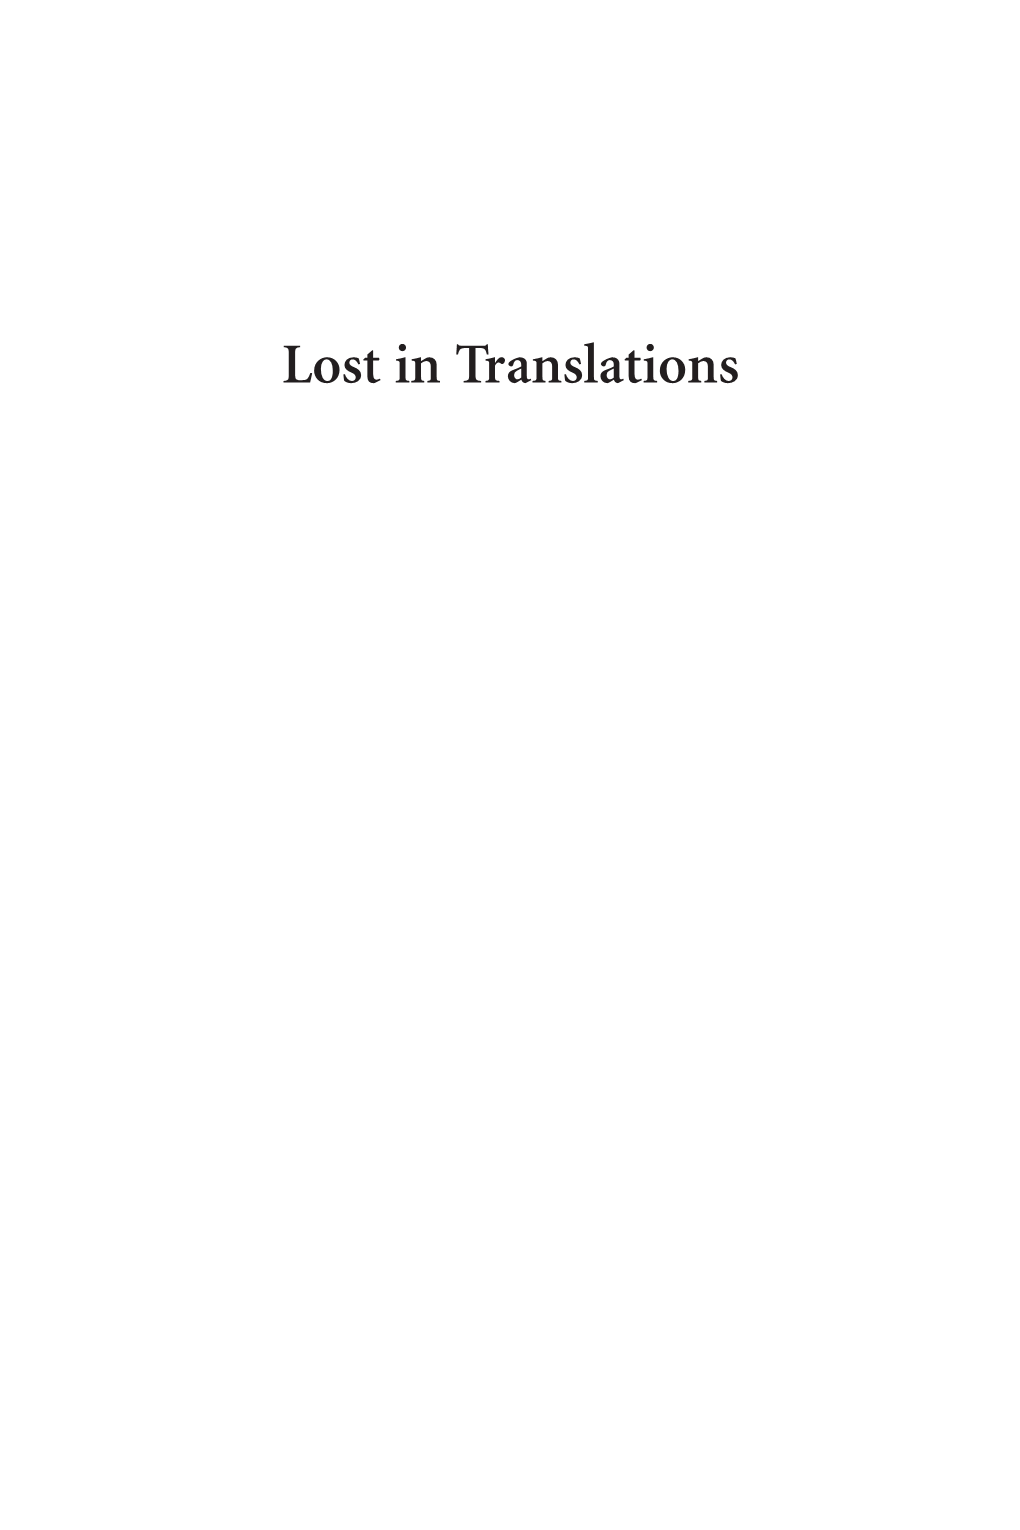 Lost in Translations Kearley 00 Fmt F2.Qxp 4/23/18 9:52 AM Page Ii